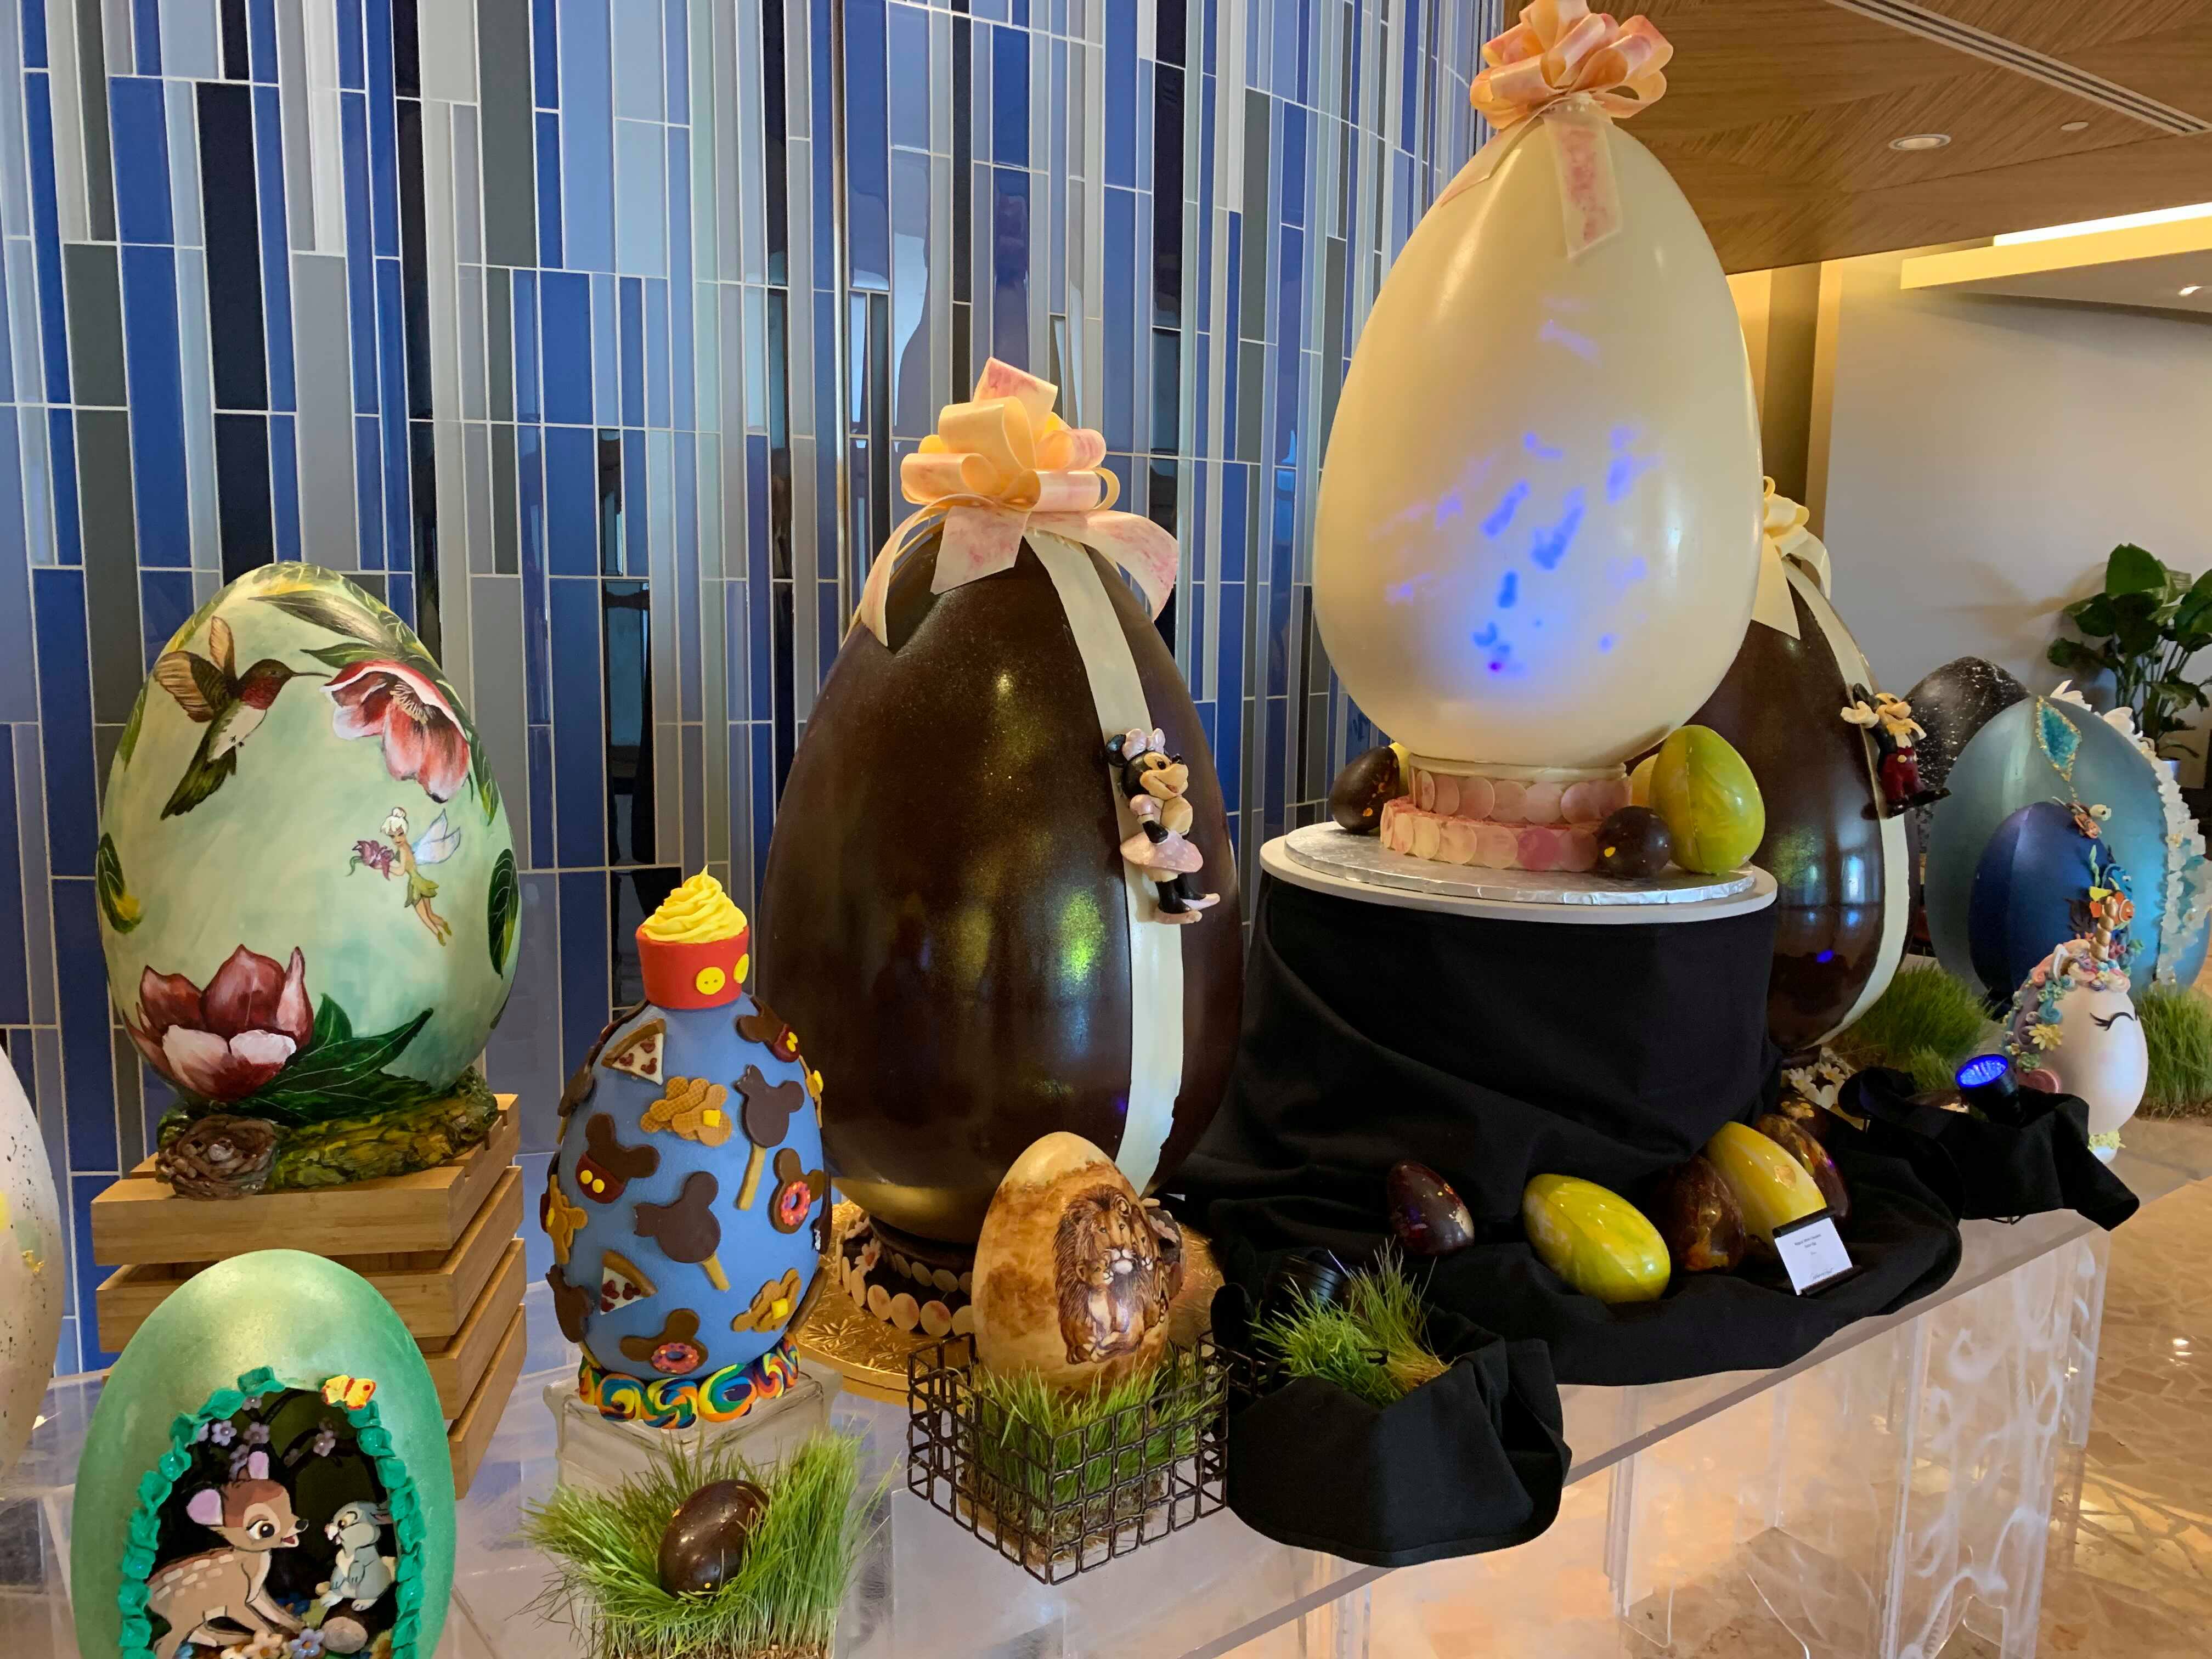 2019 Easter Egg Display At Disney’s Contemporary Resort